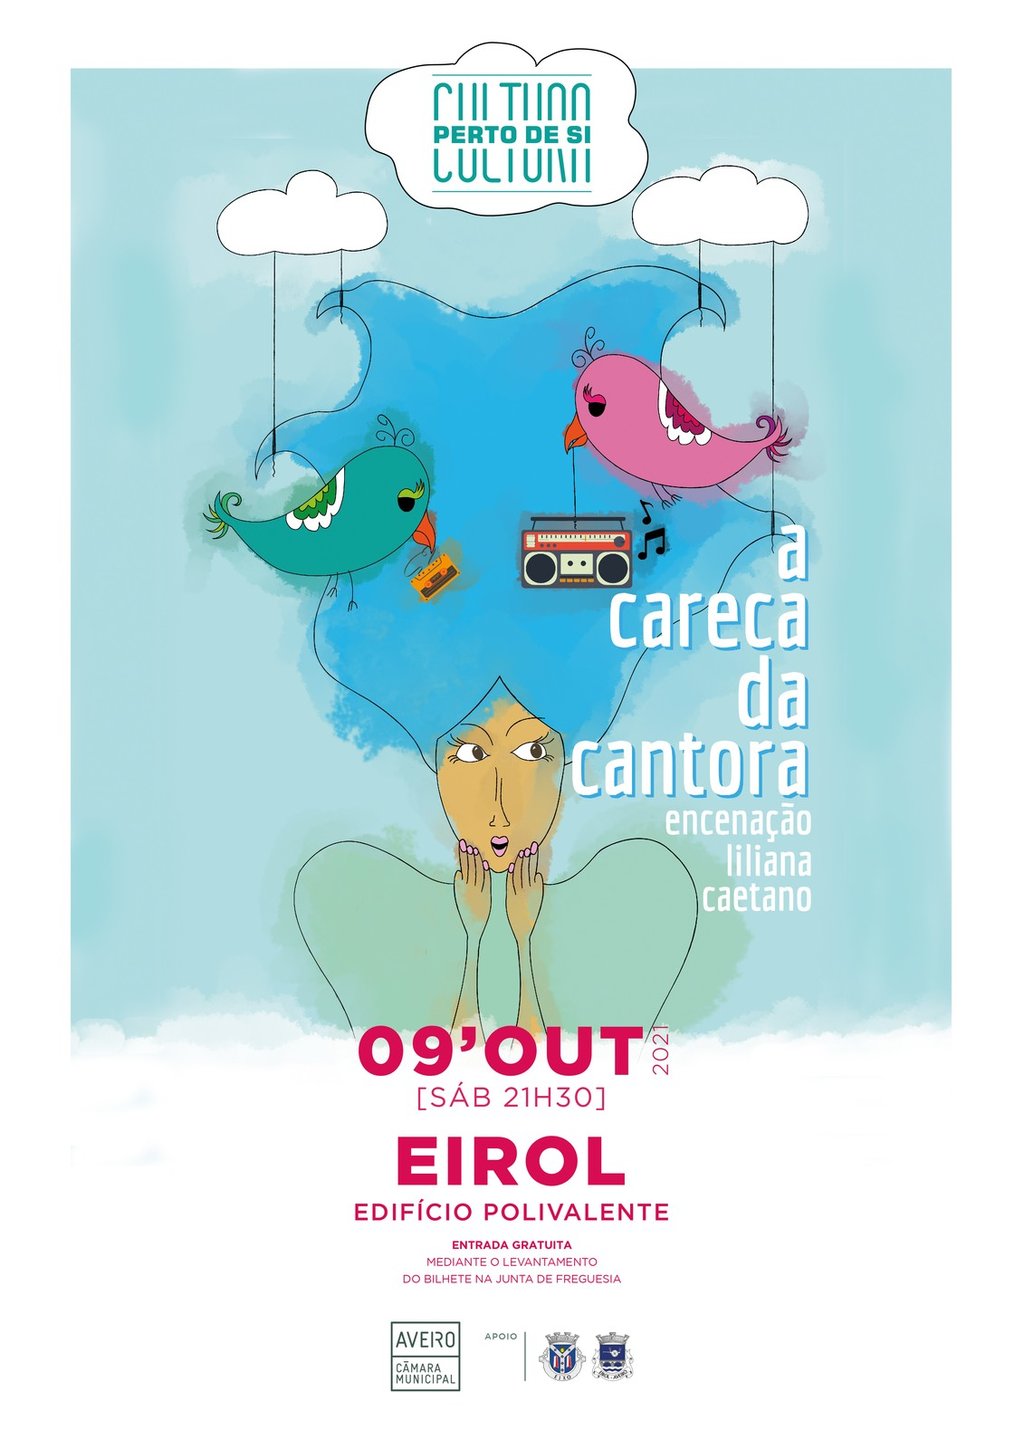 CULTURA_PERTO_DE_SI_EIROL_CARECA_09OUT_CARTAZA3-01